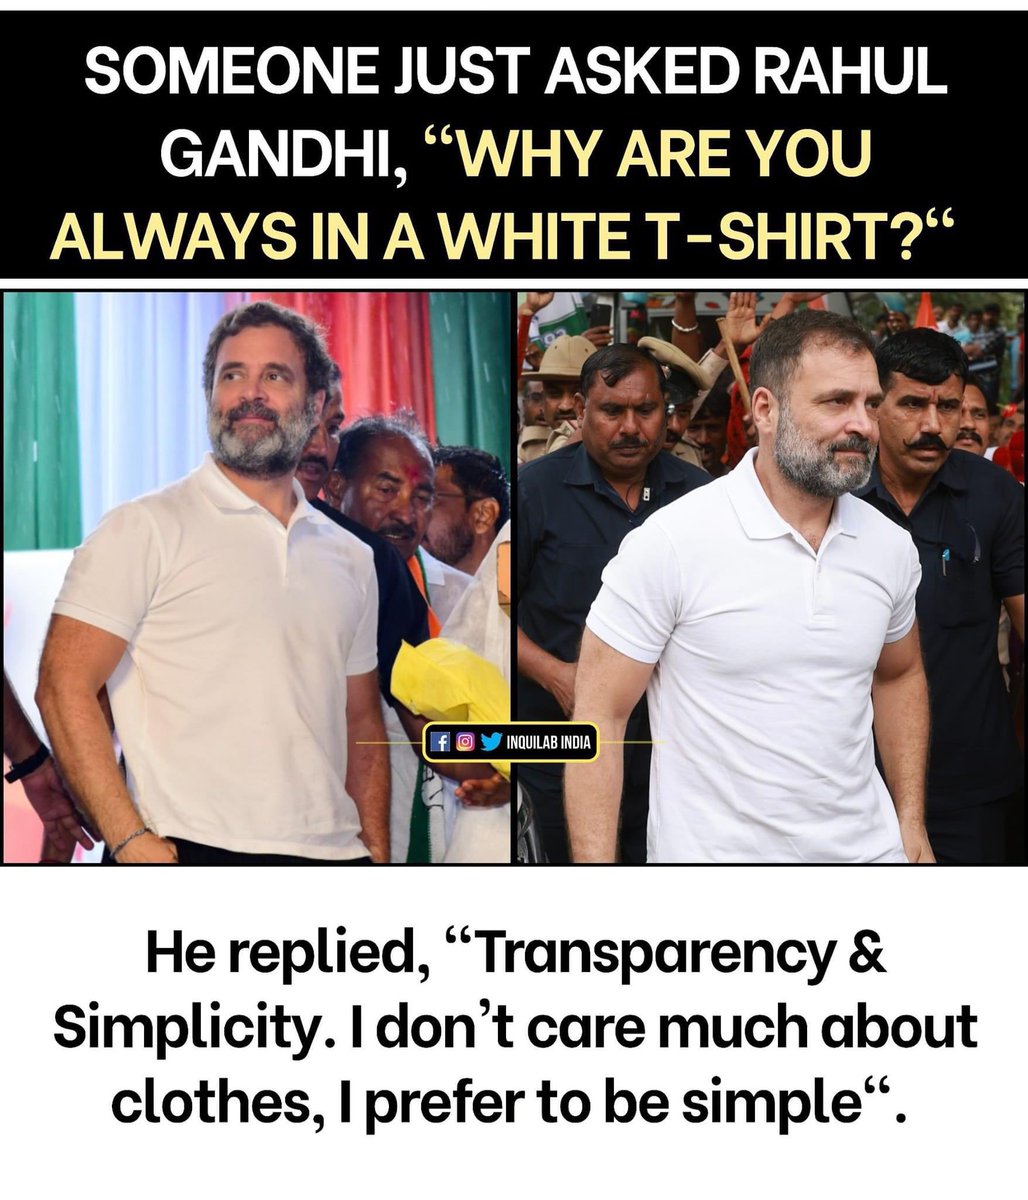 Simplicity synonym is Rahul Gandhi ❤️